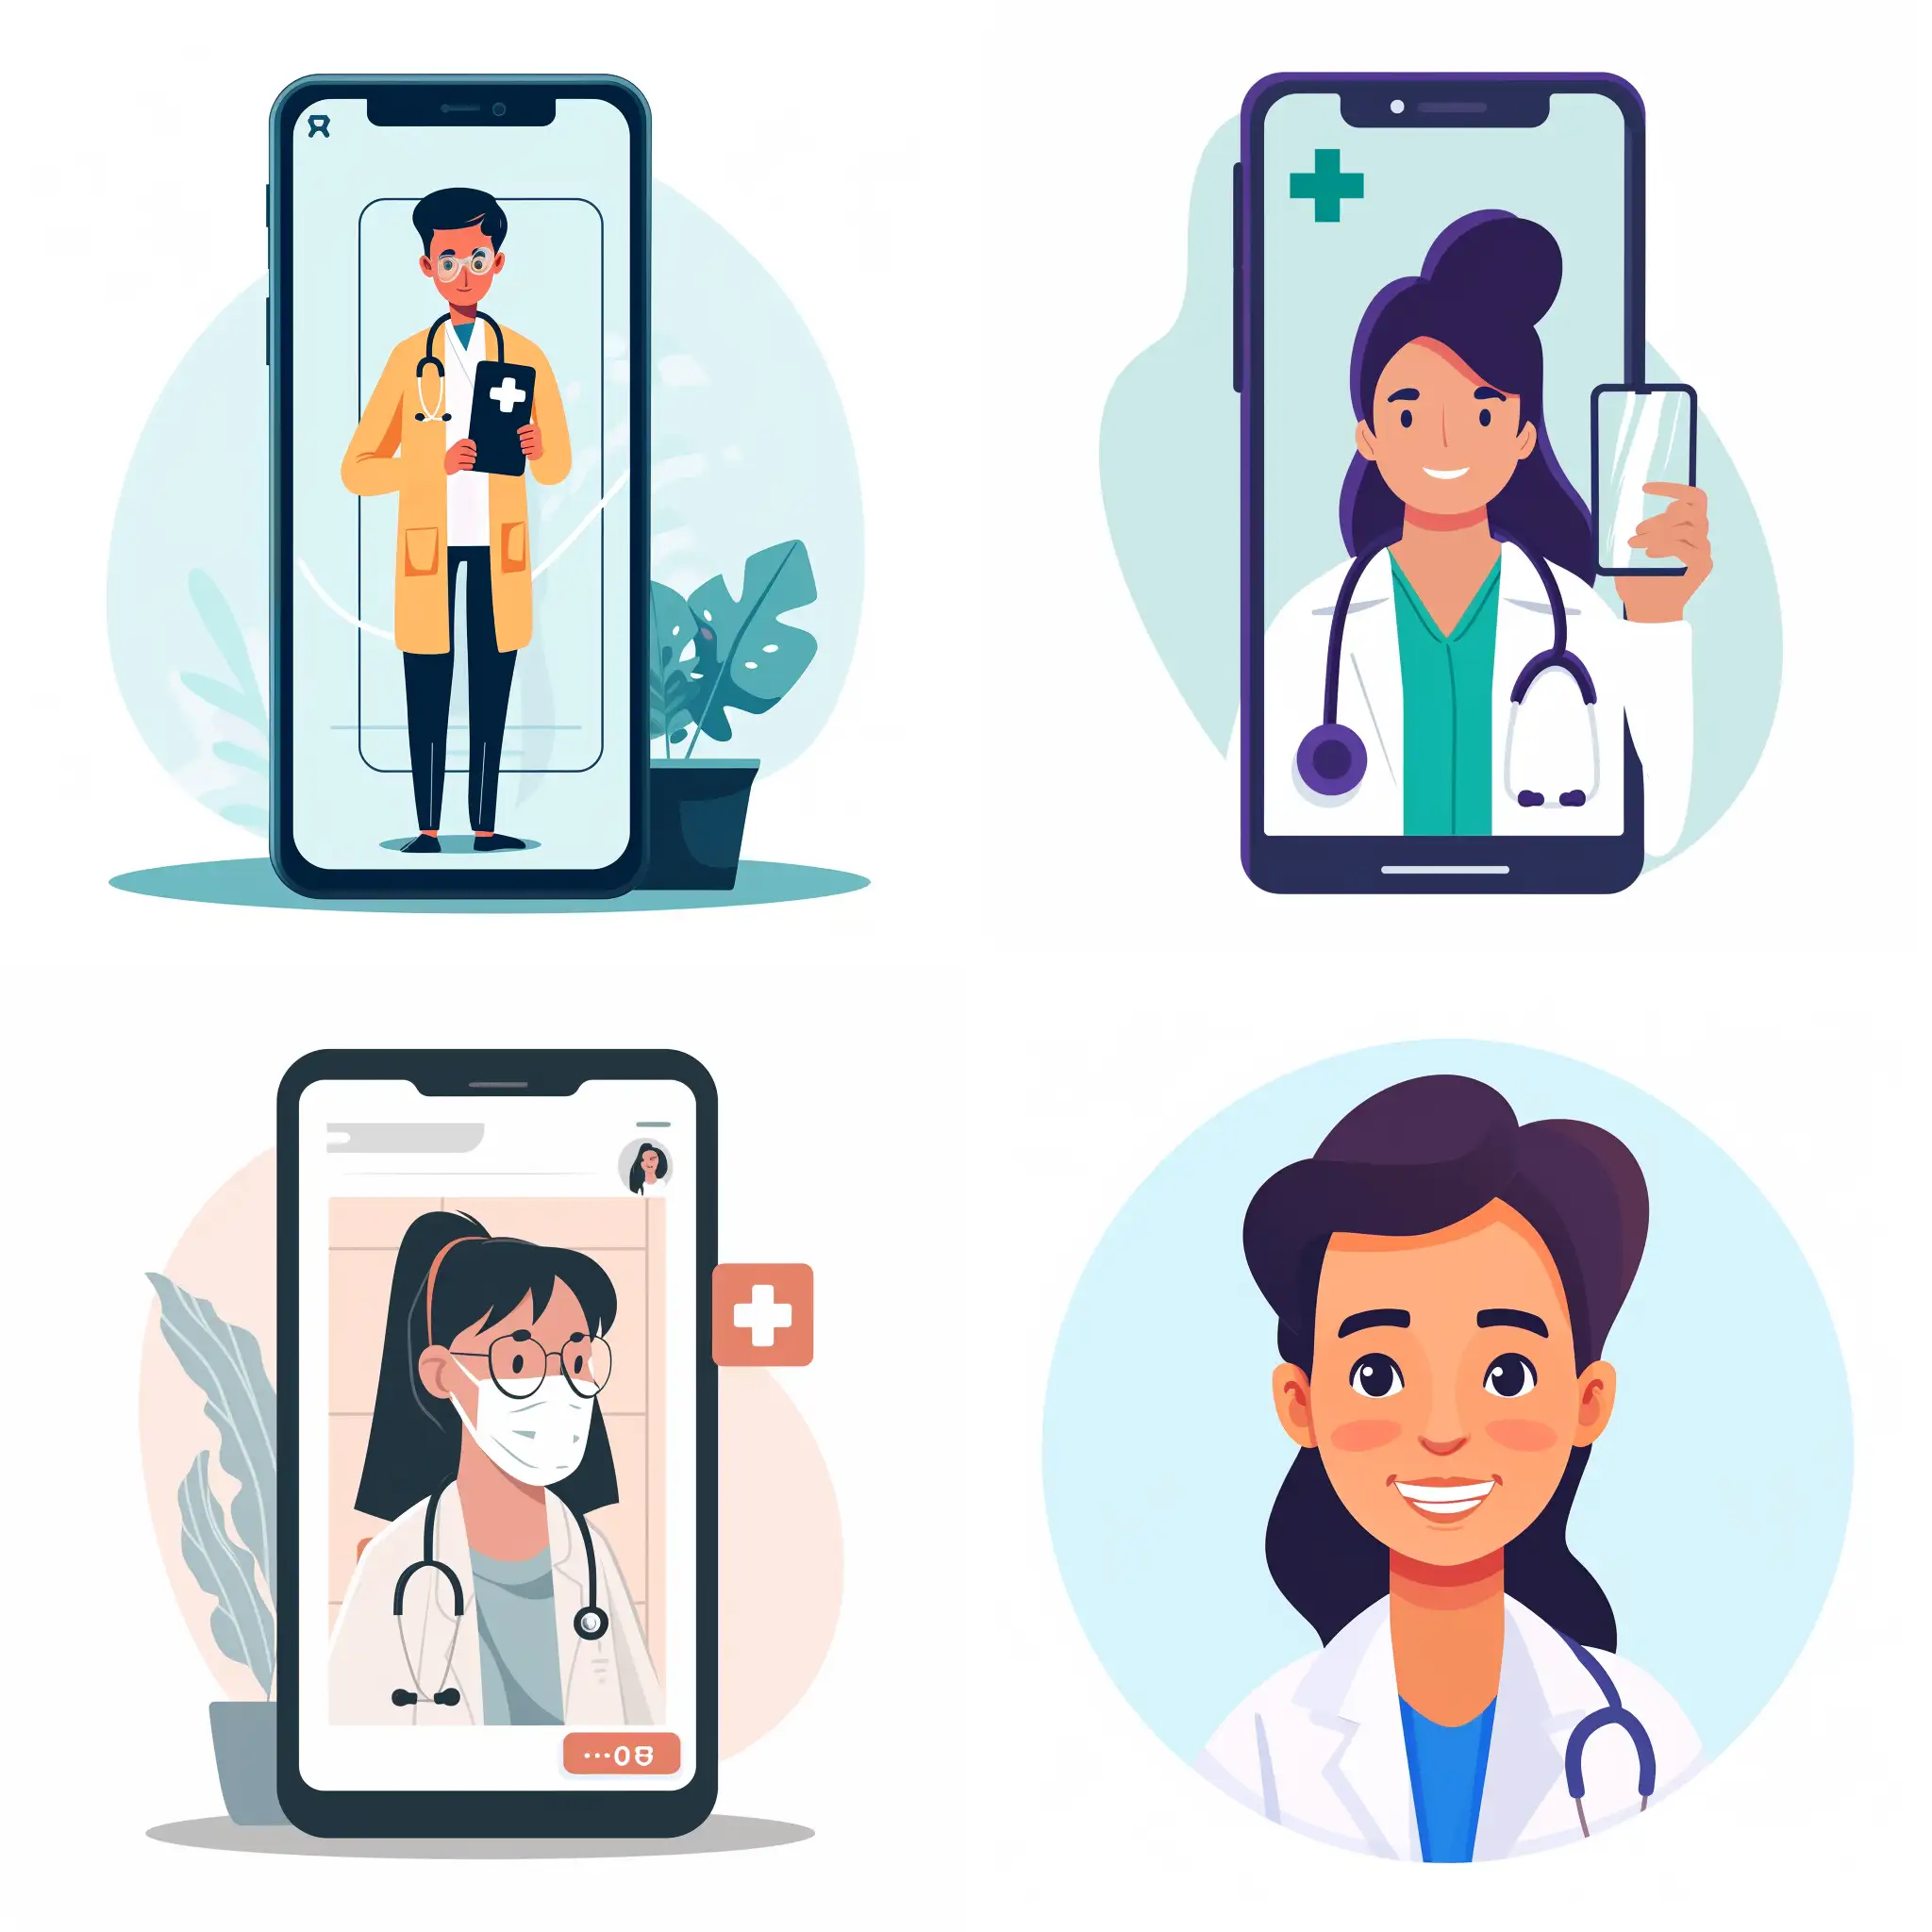 Mobile-App-Patient-Avatar-Version-6-with-Aspect-Ratio-11